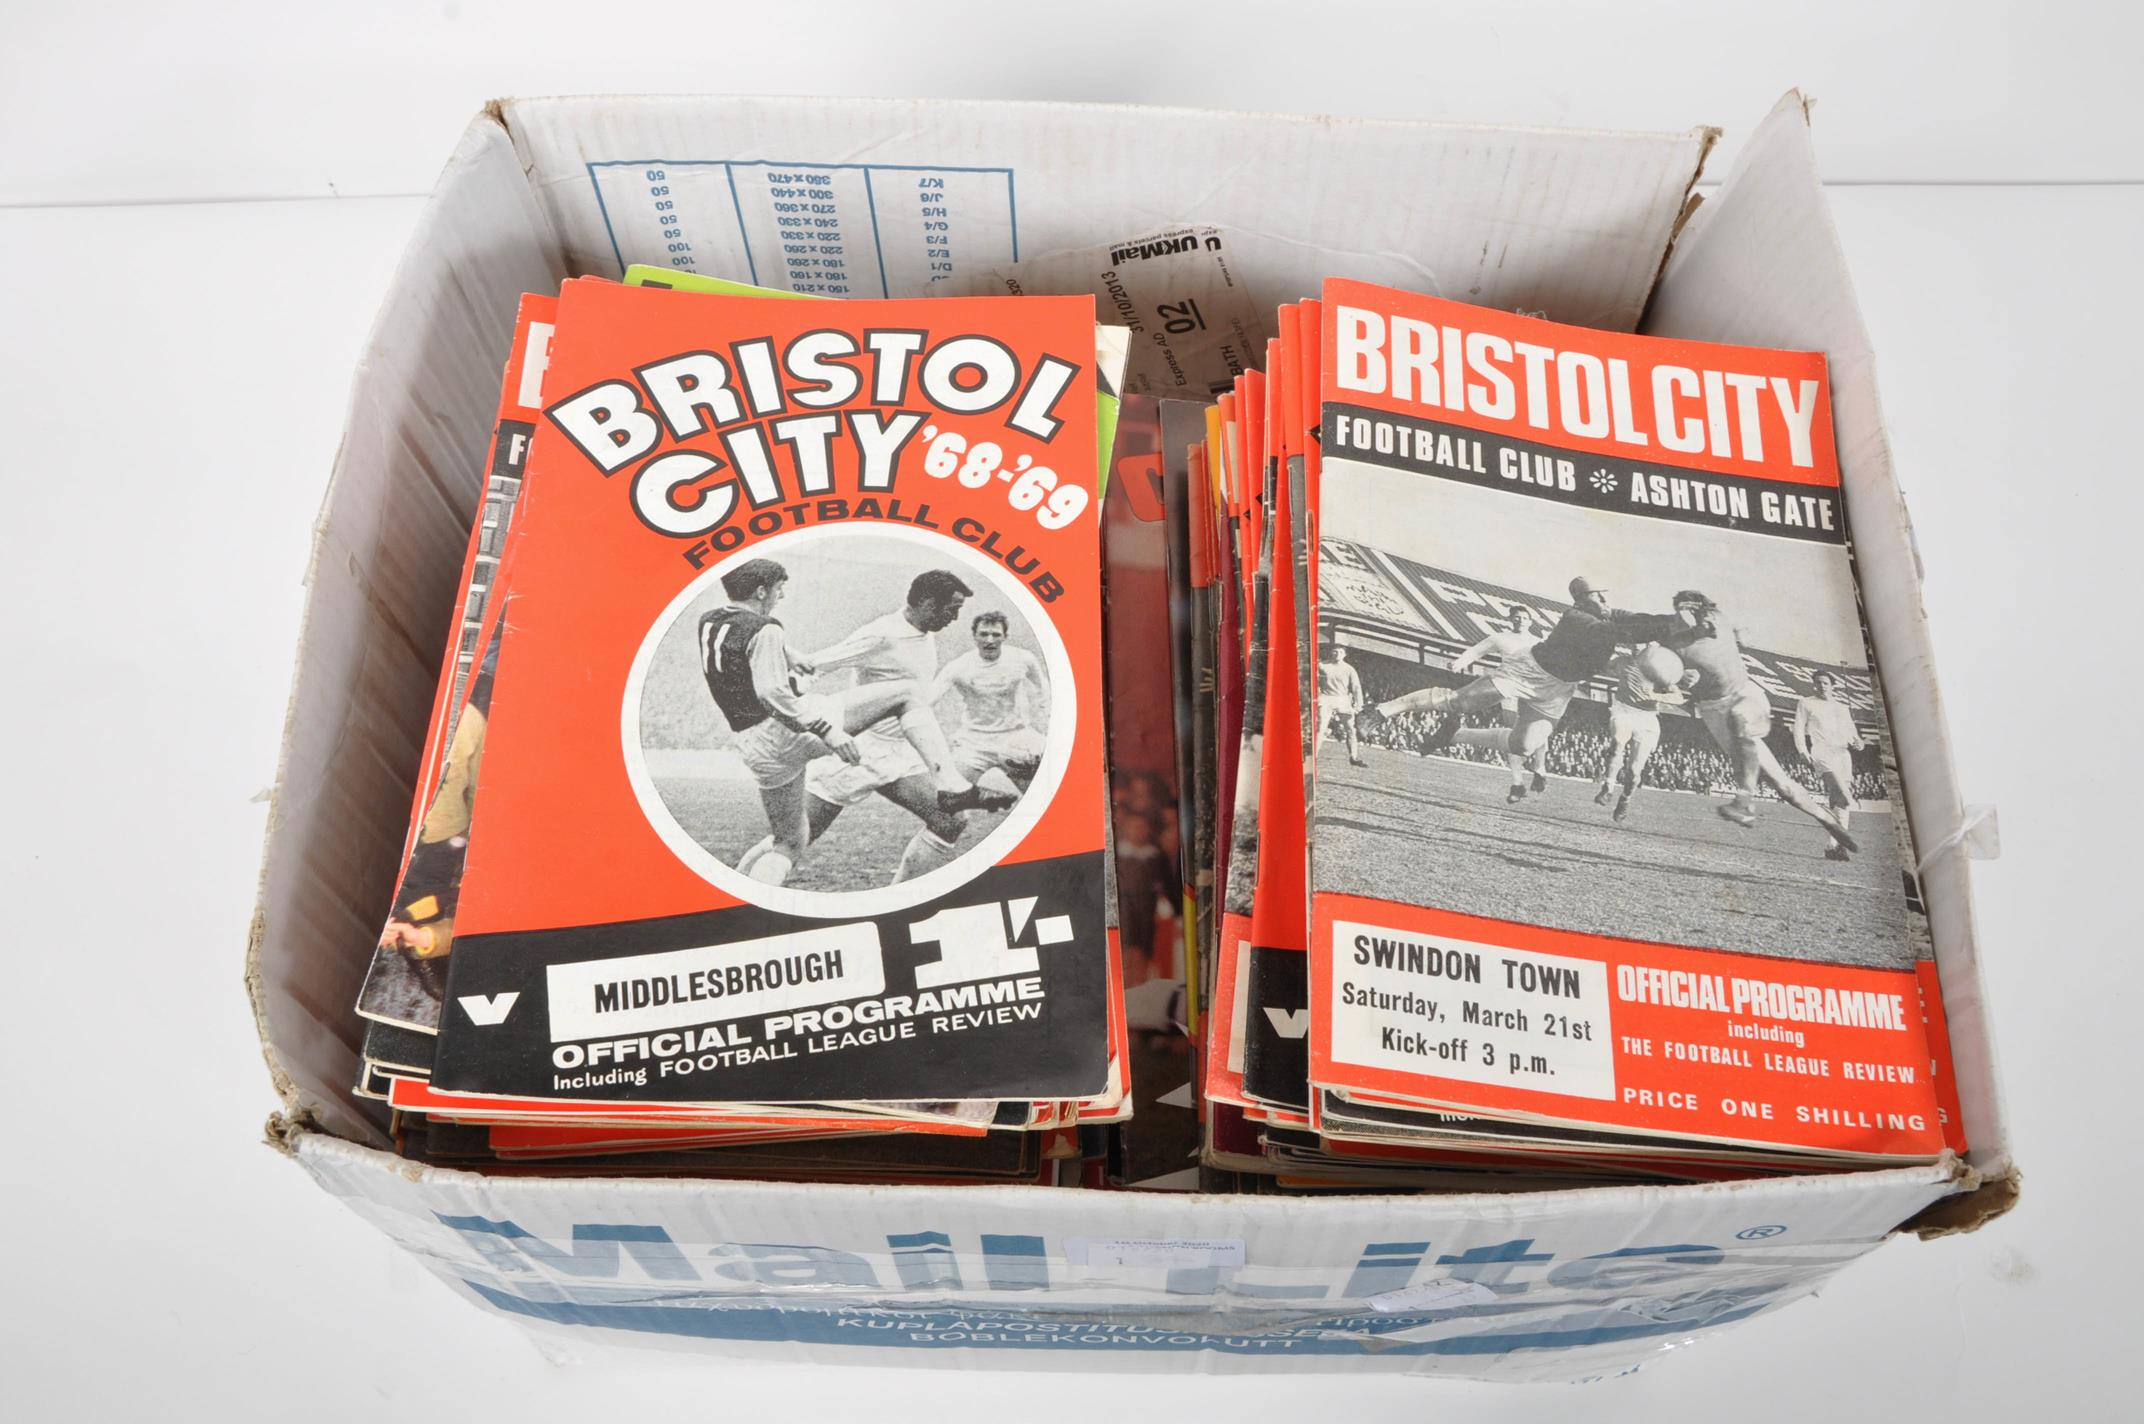 A box of Bristol City football programmes